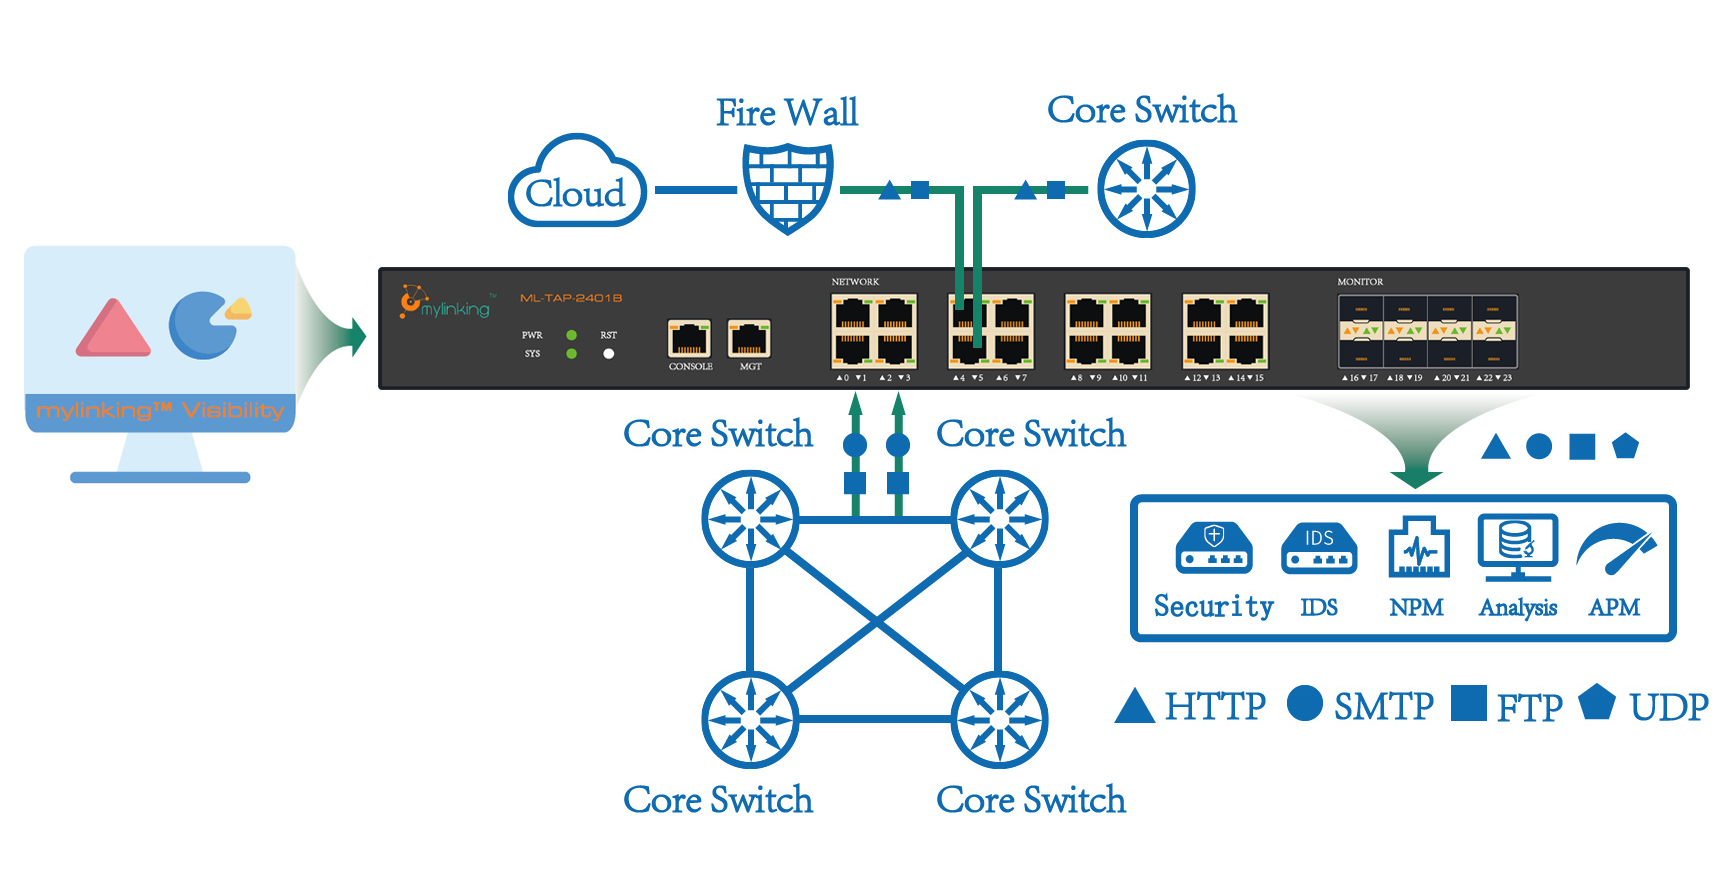 Welche Funktionen hat der Network Packet Broker (NPB) & Test Access Port (TAP)?